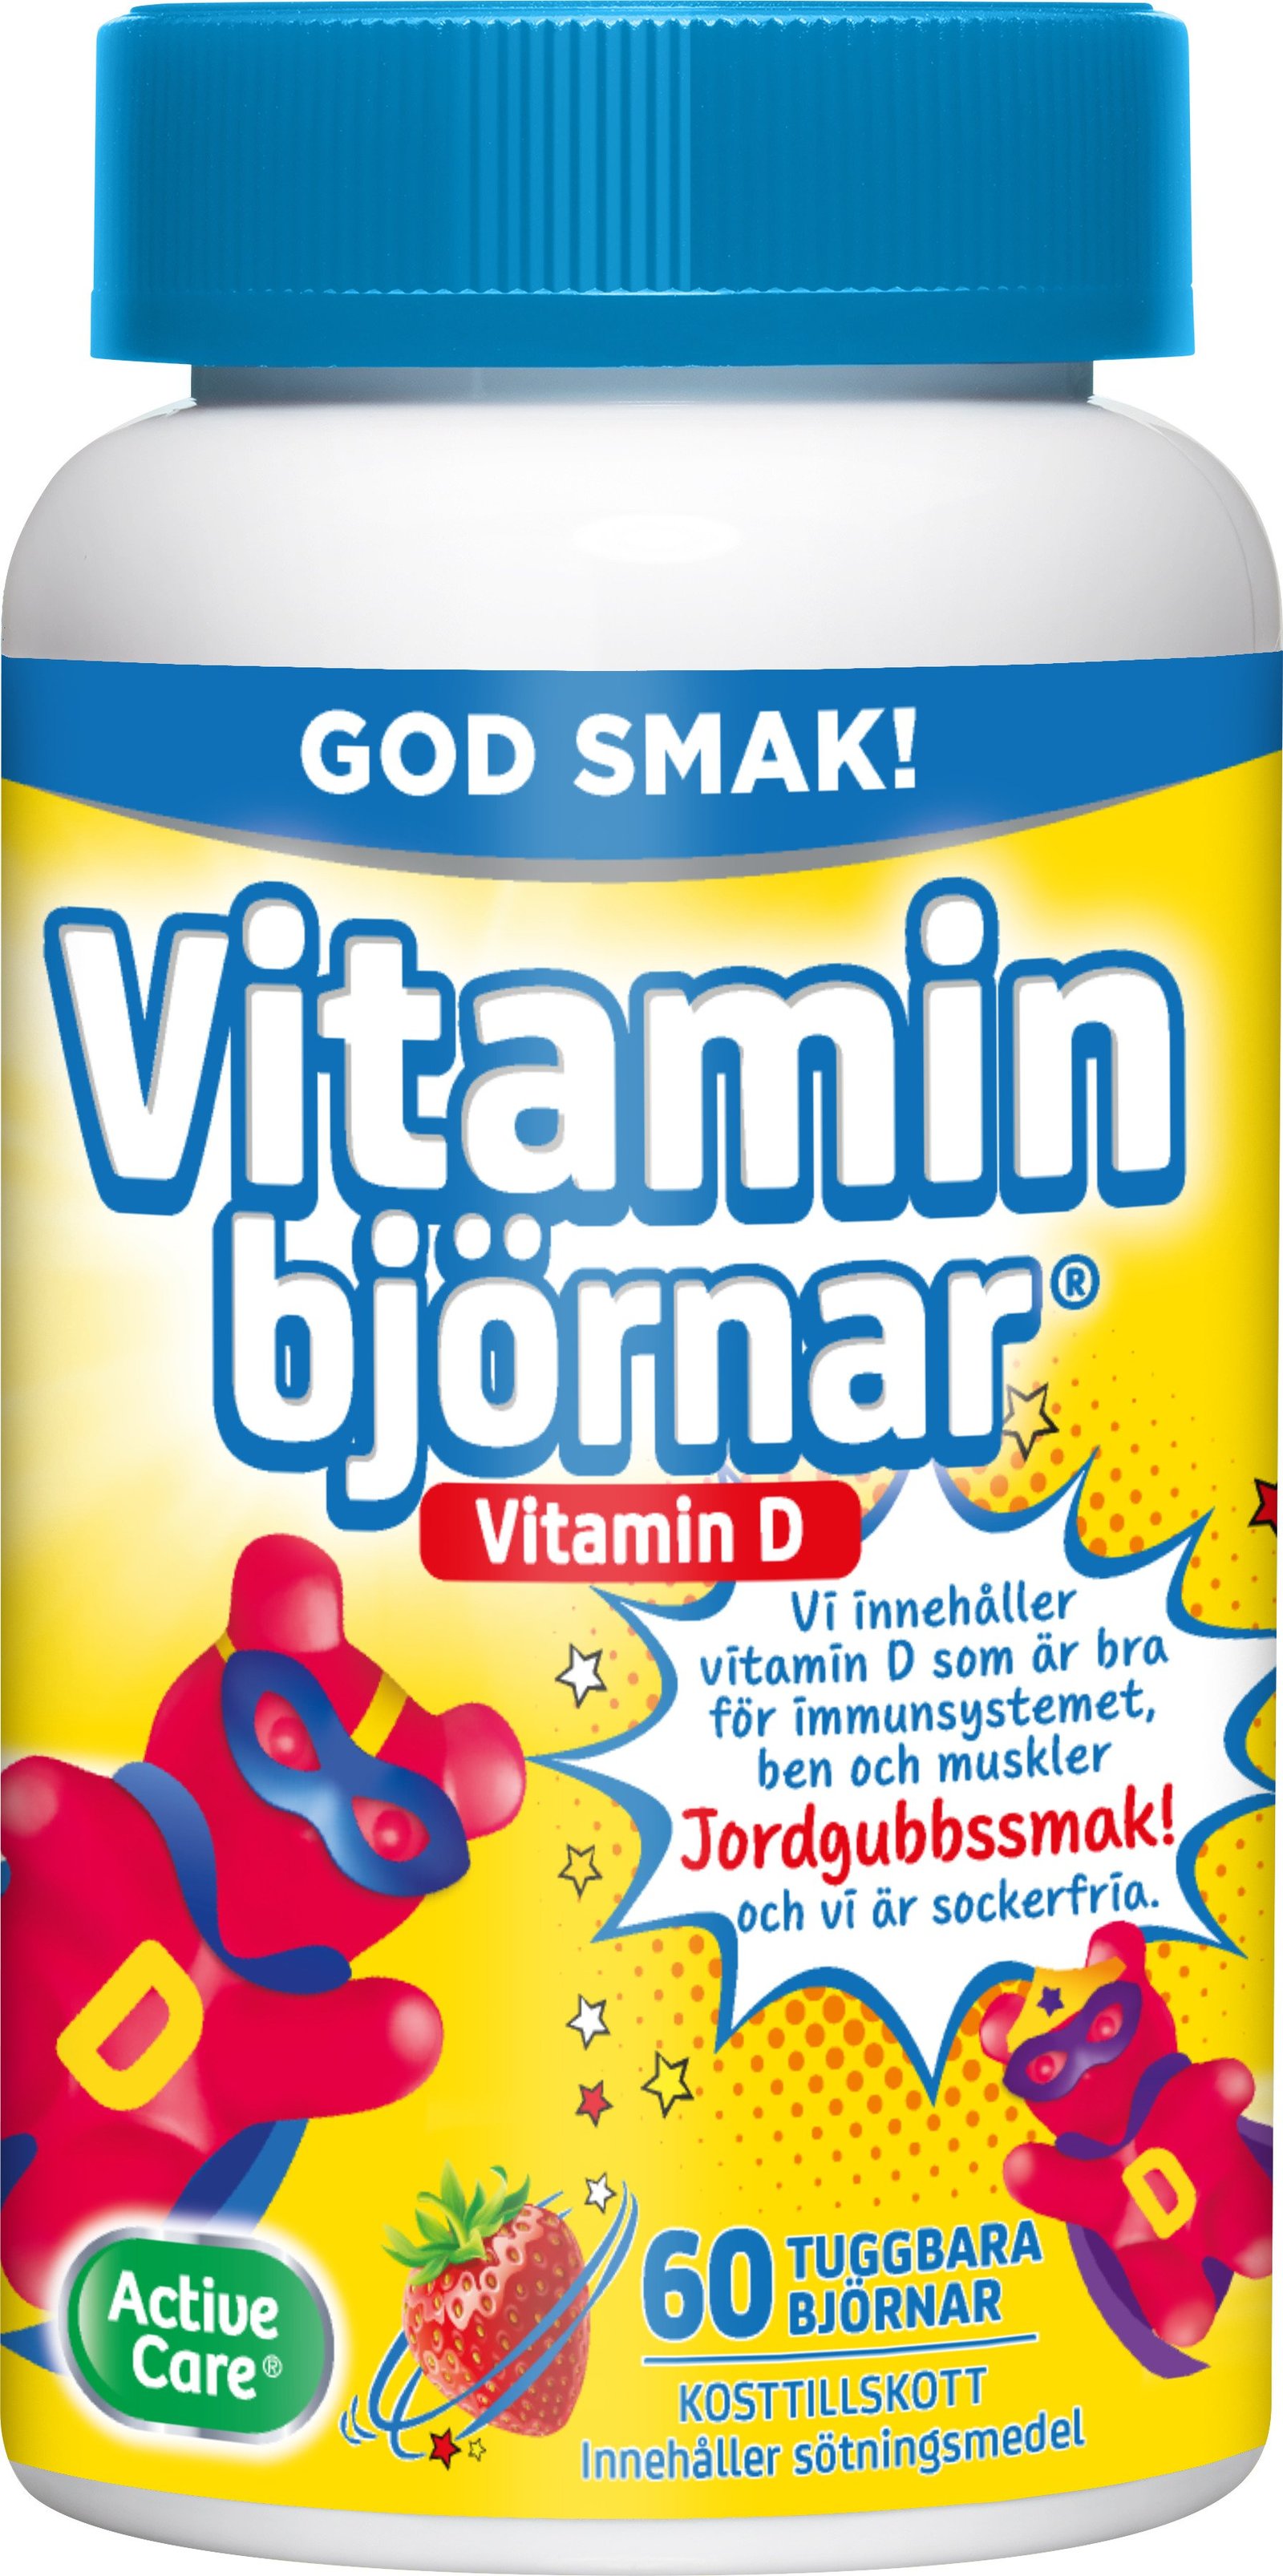 Active Care Vitaminbjörnar Vitamin D 60 tuggtabletter